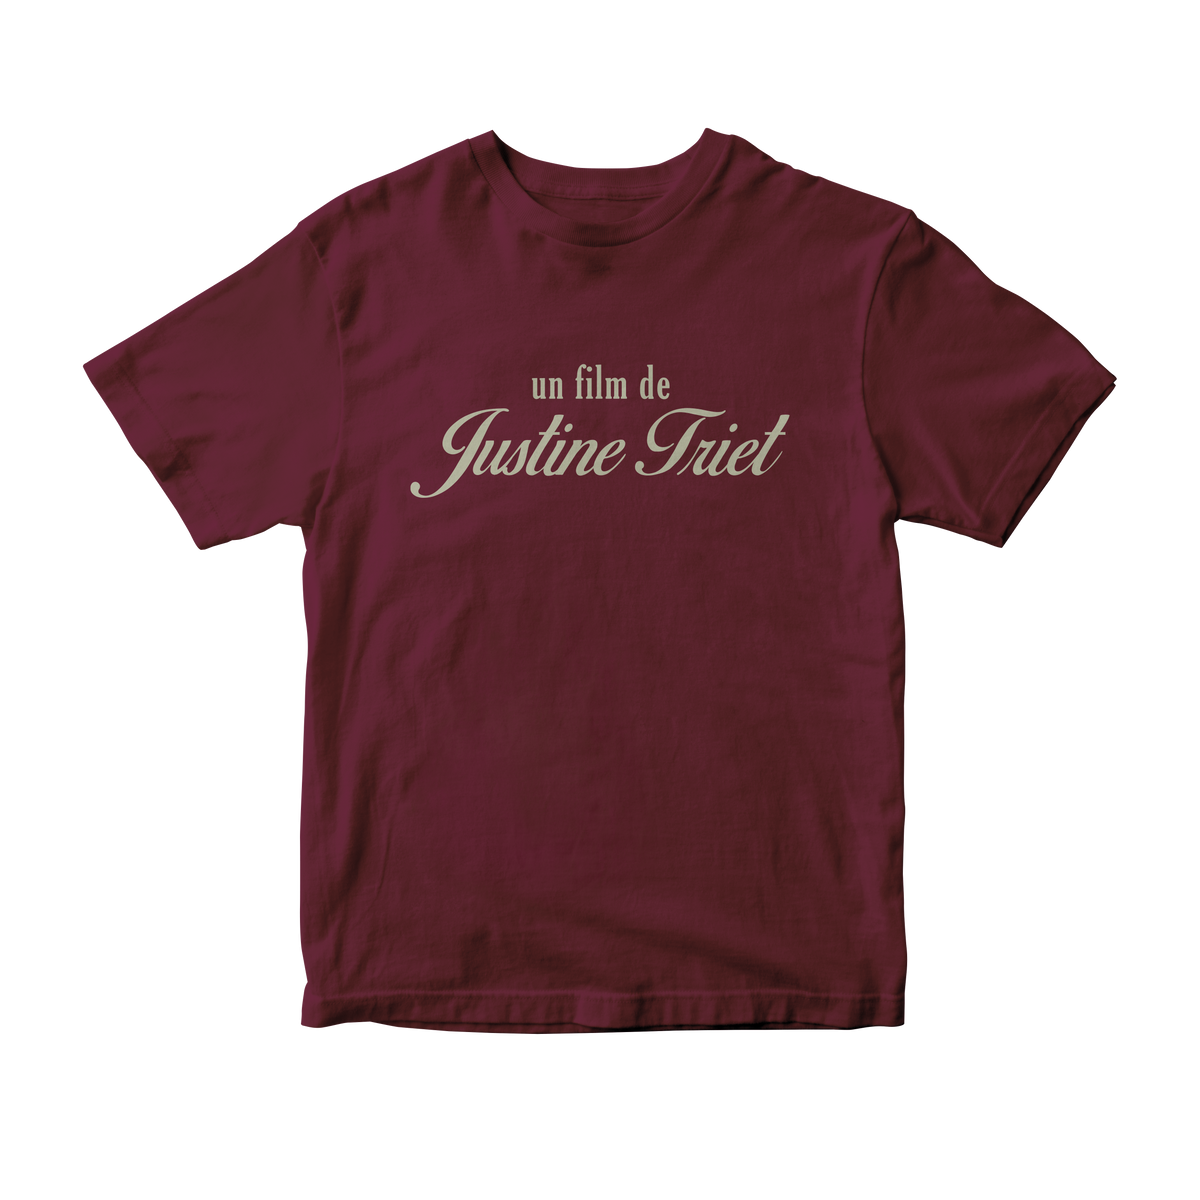 Nome do produto: Camiseta Un film de Justine Triet